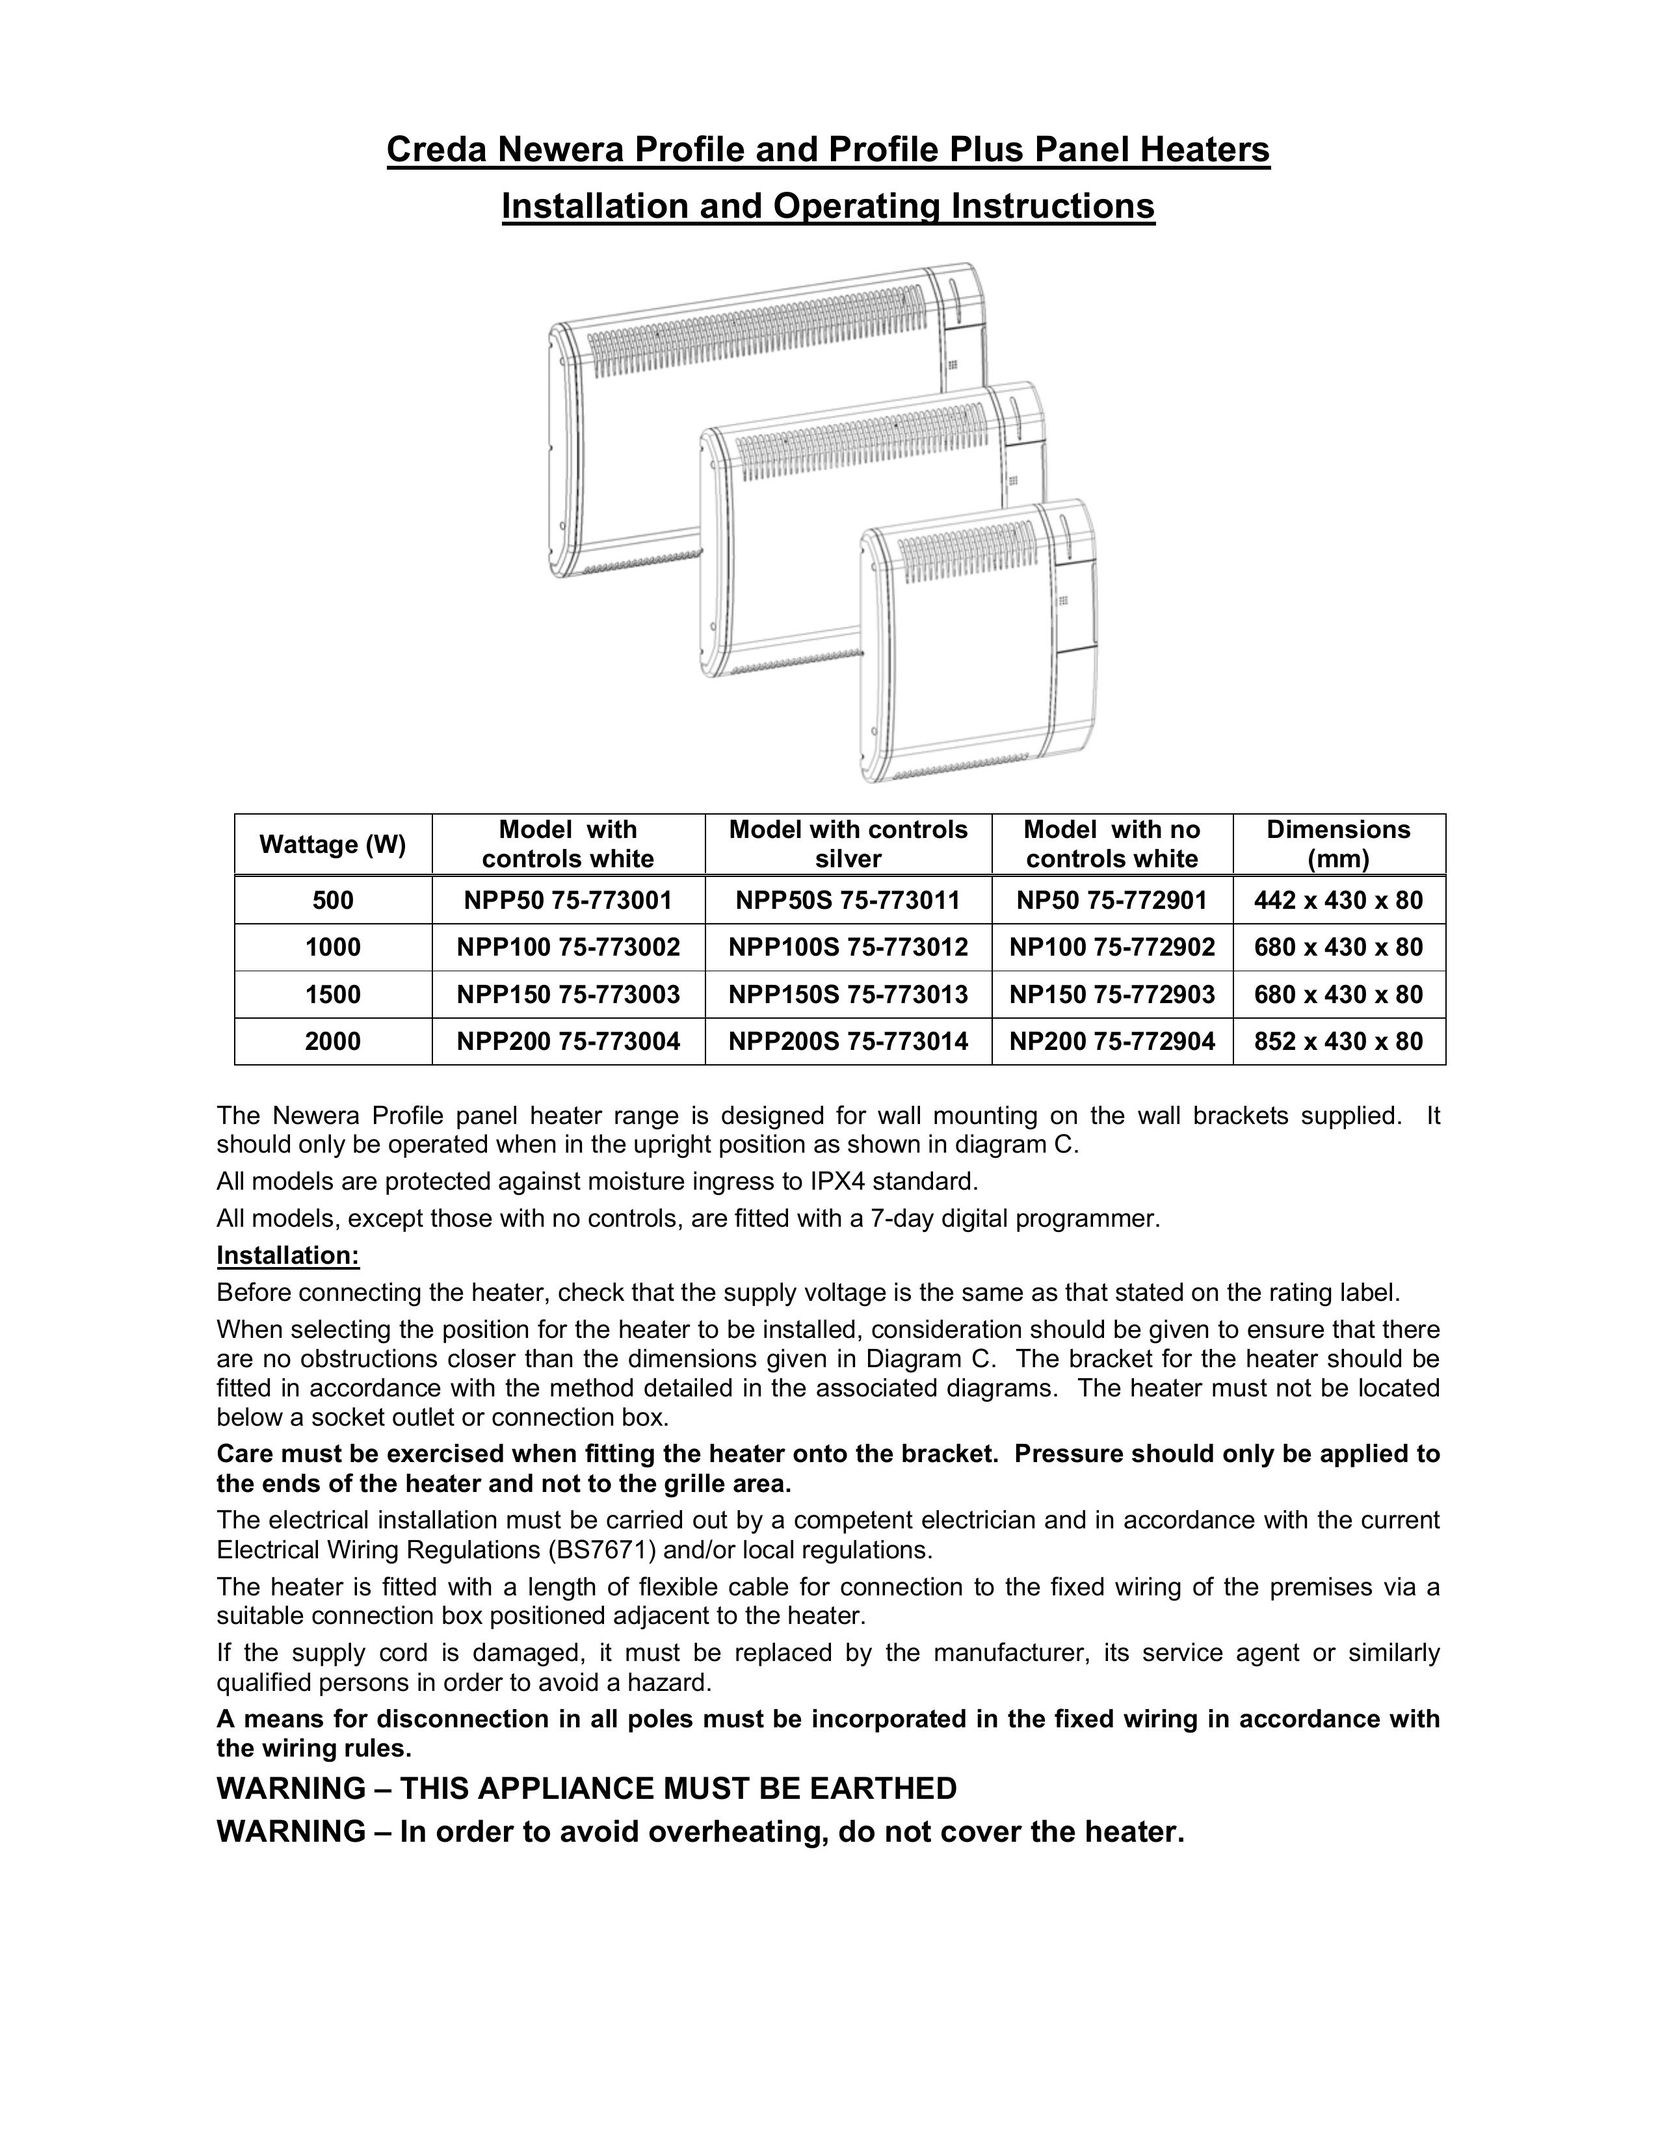 Creda NPP150S 75-773013 Air Conditioner User Manual